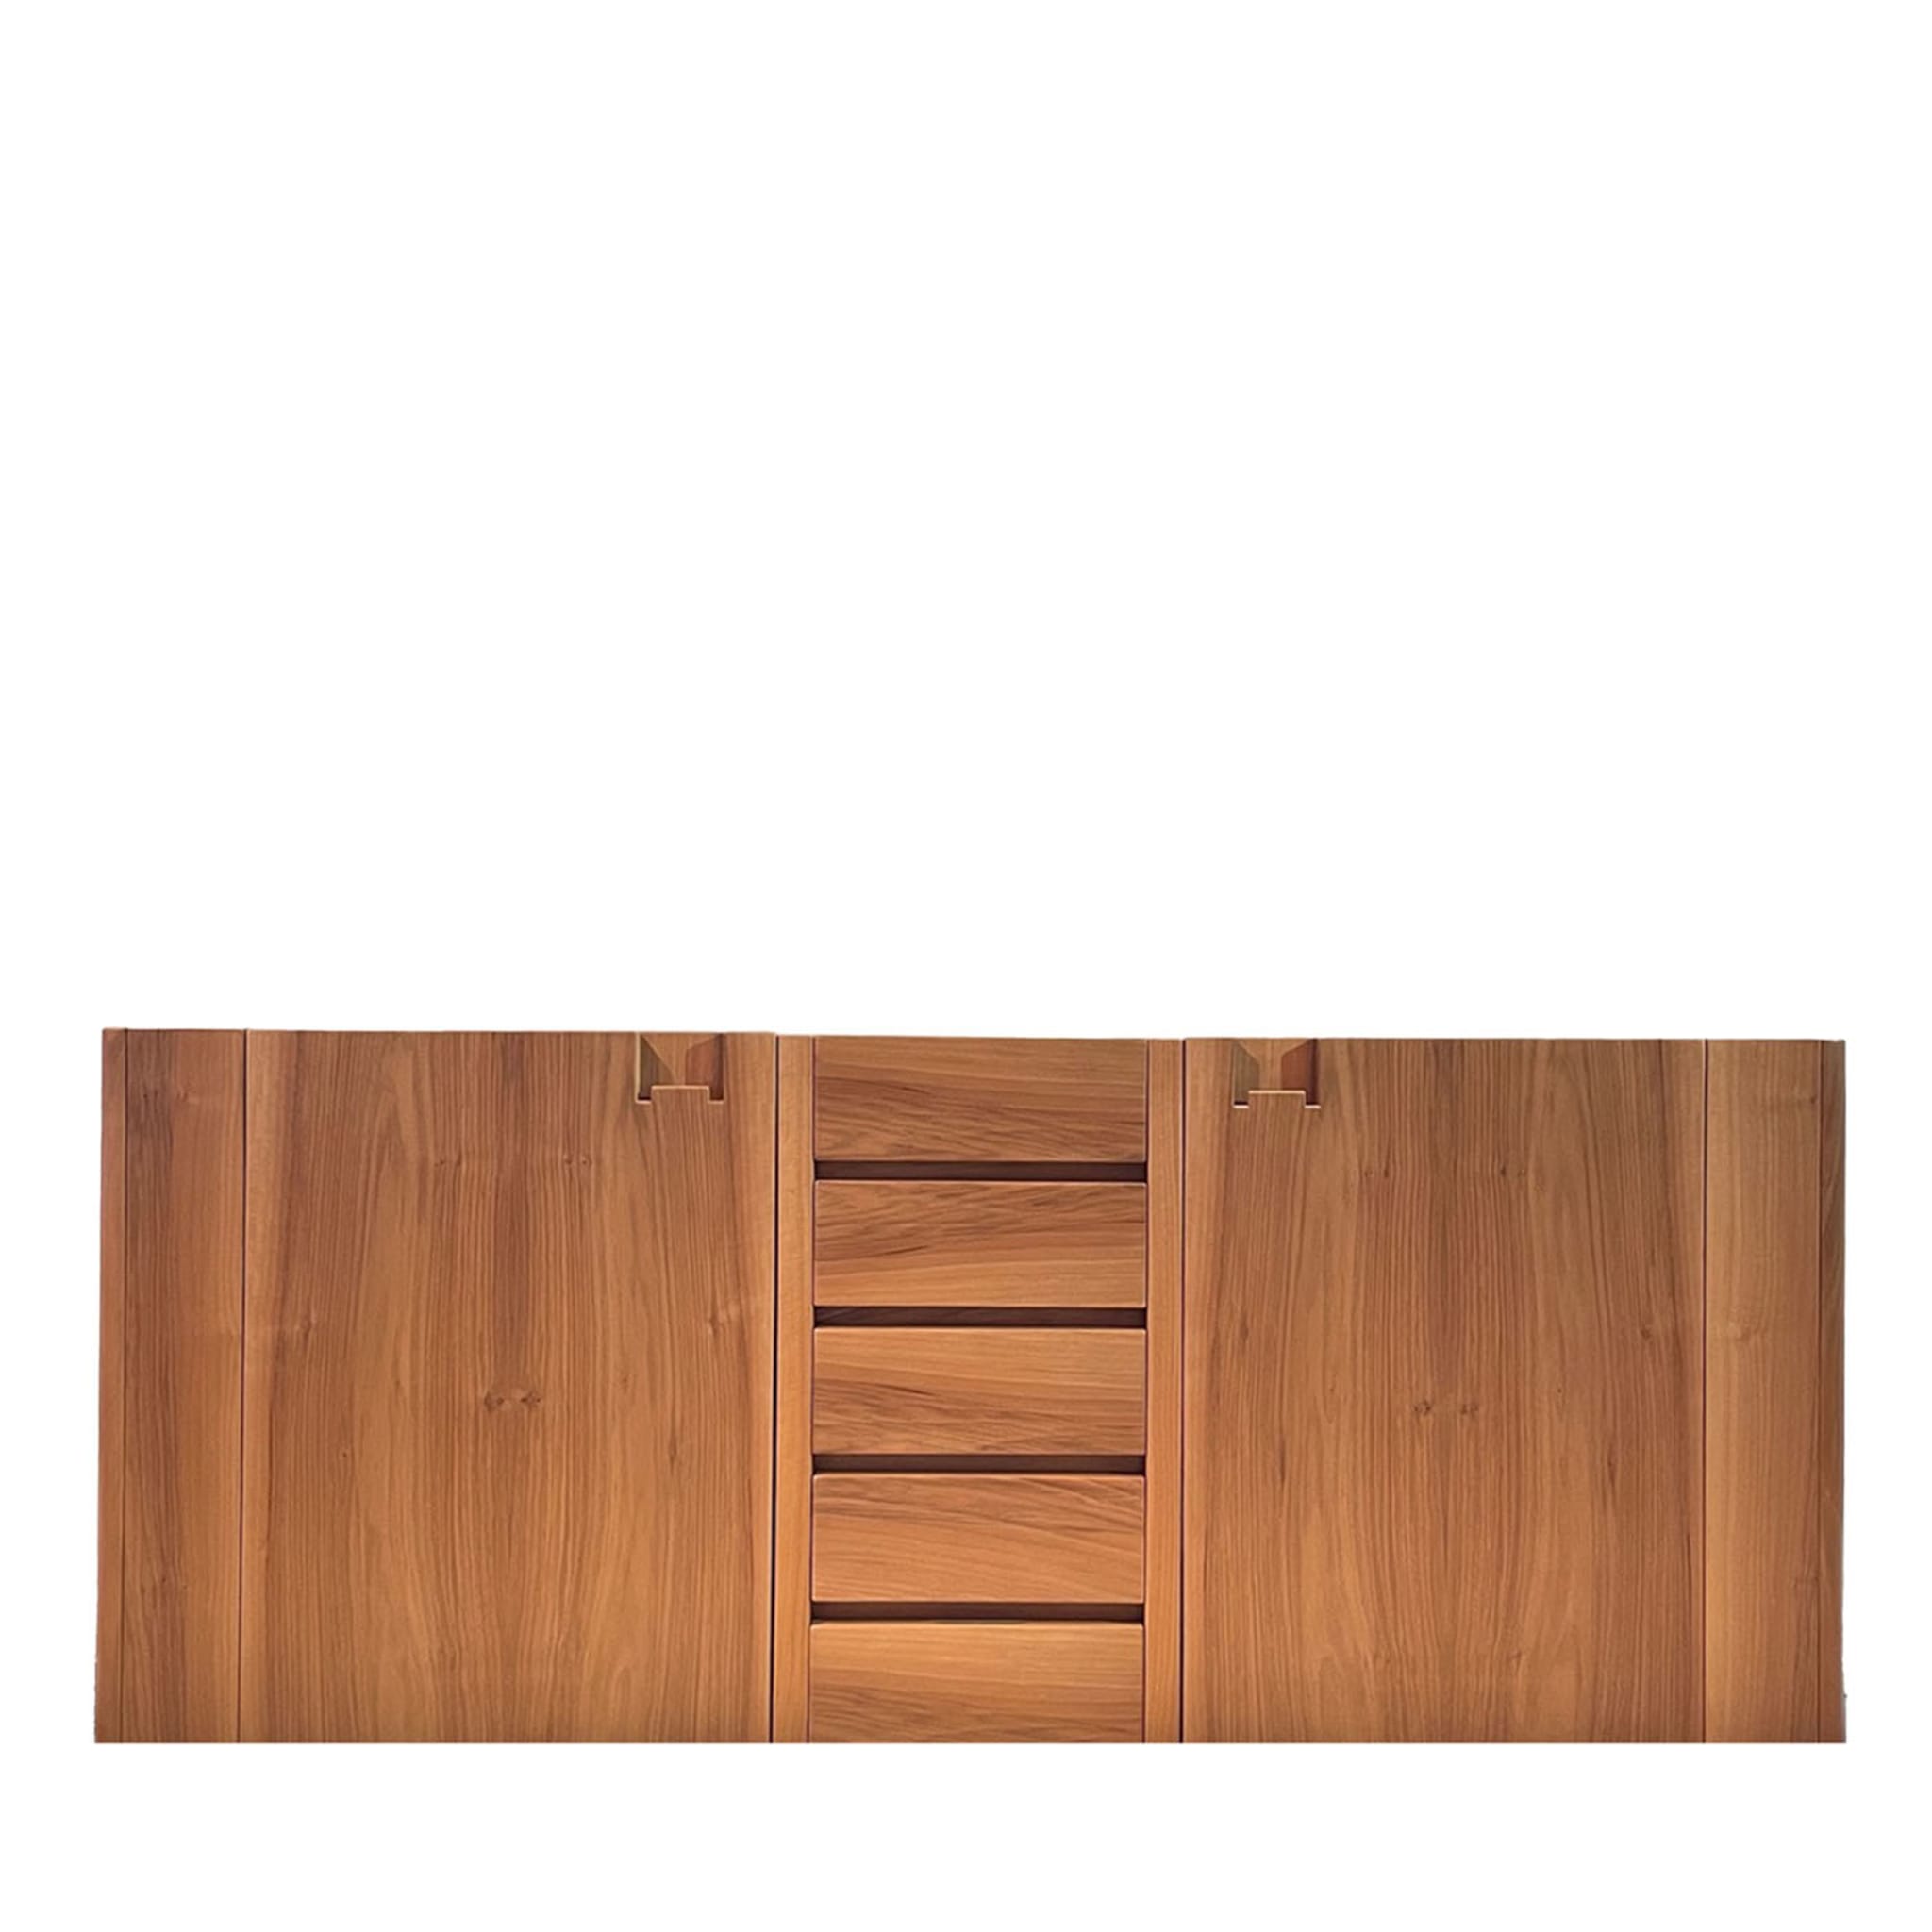 Boema 200 2-Door Walnut Sideboard with Drawers - Main view